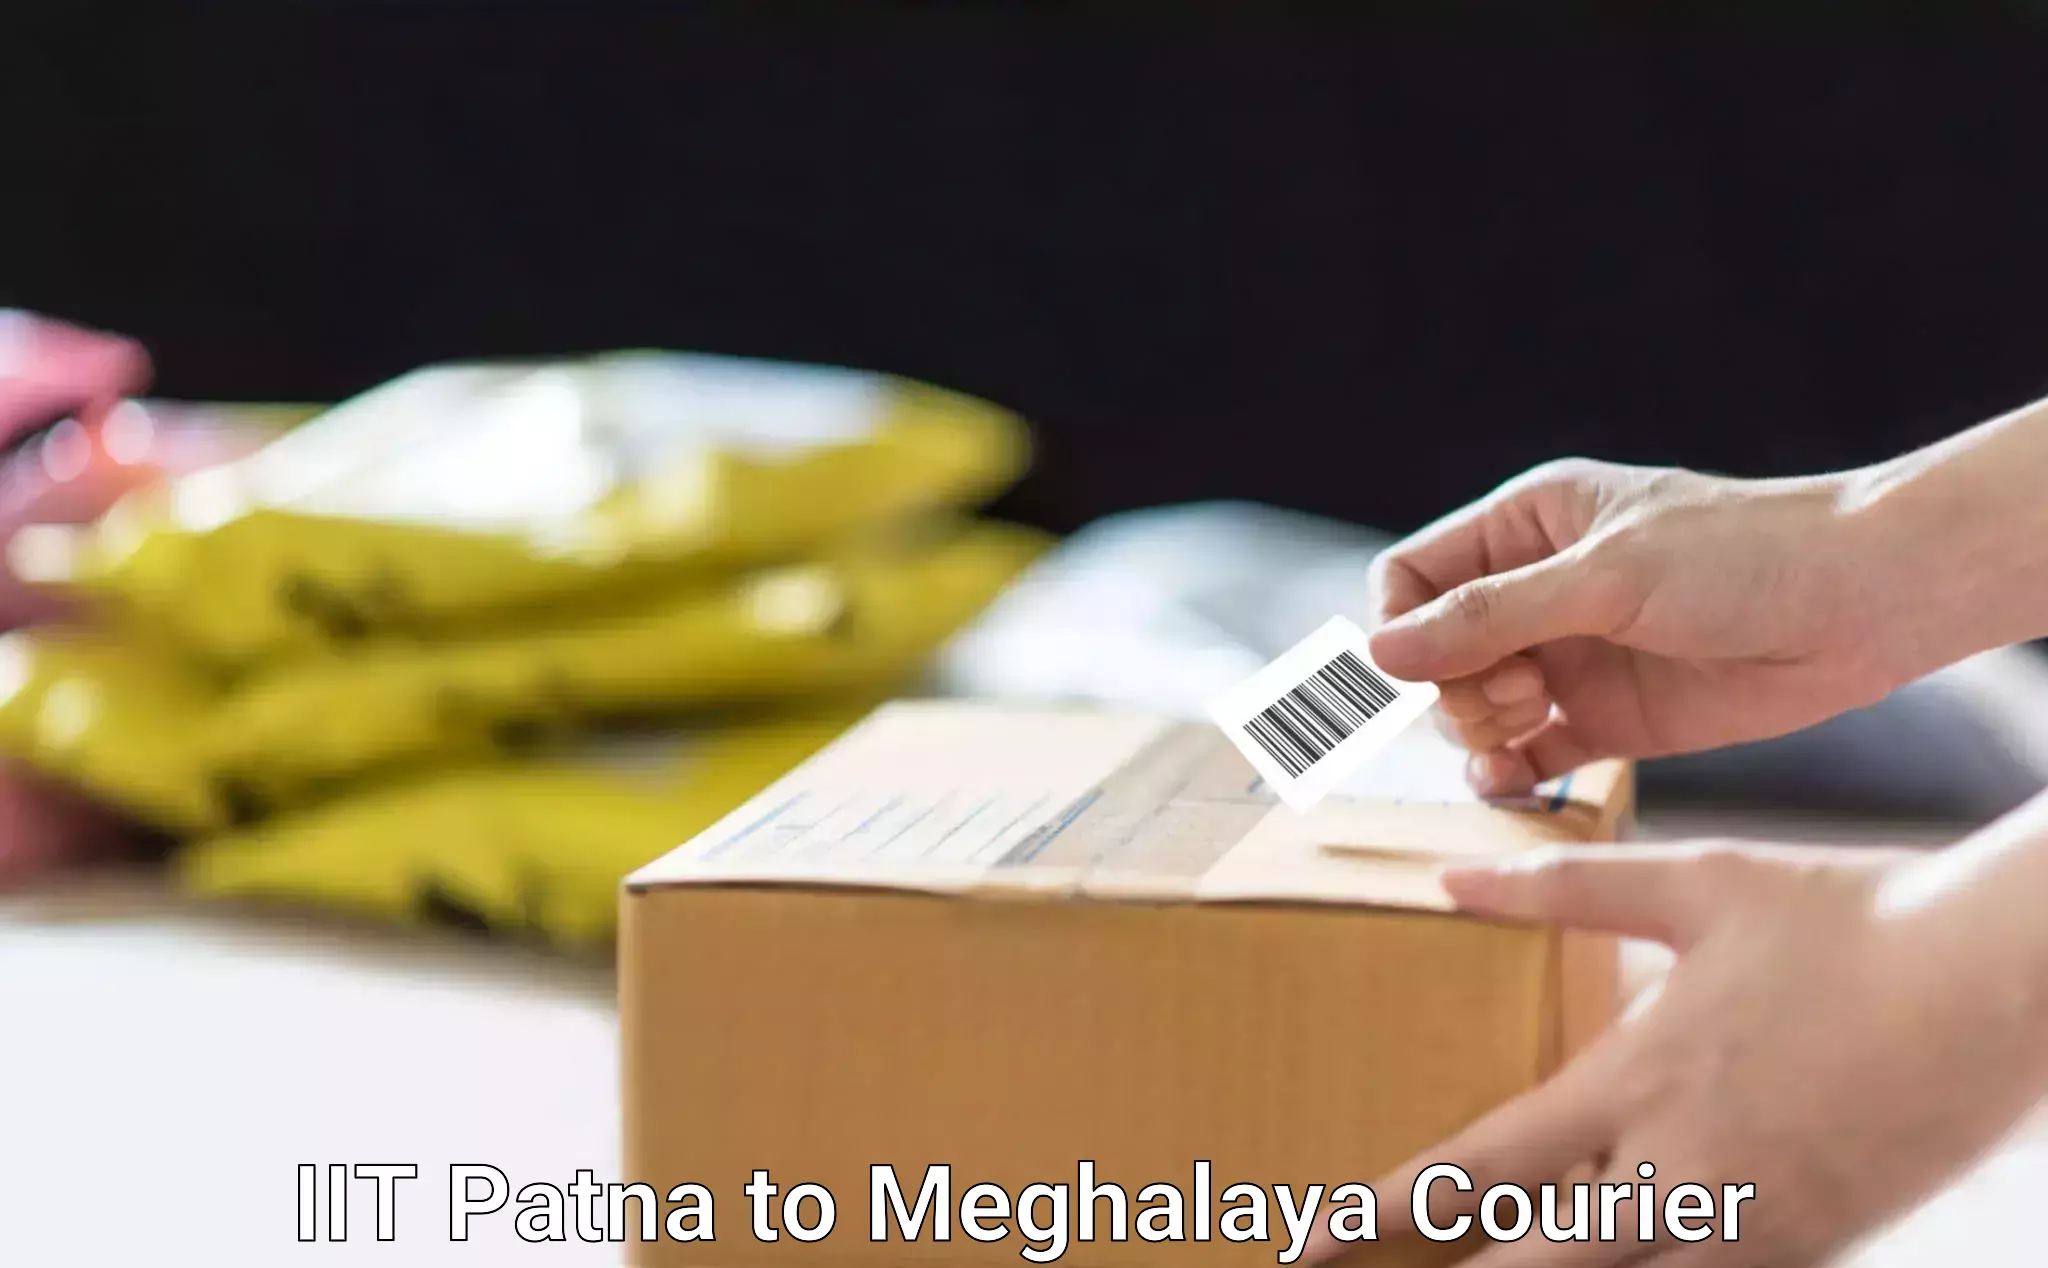 Professional moving strategies IIT Patna to Meghalaya